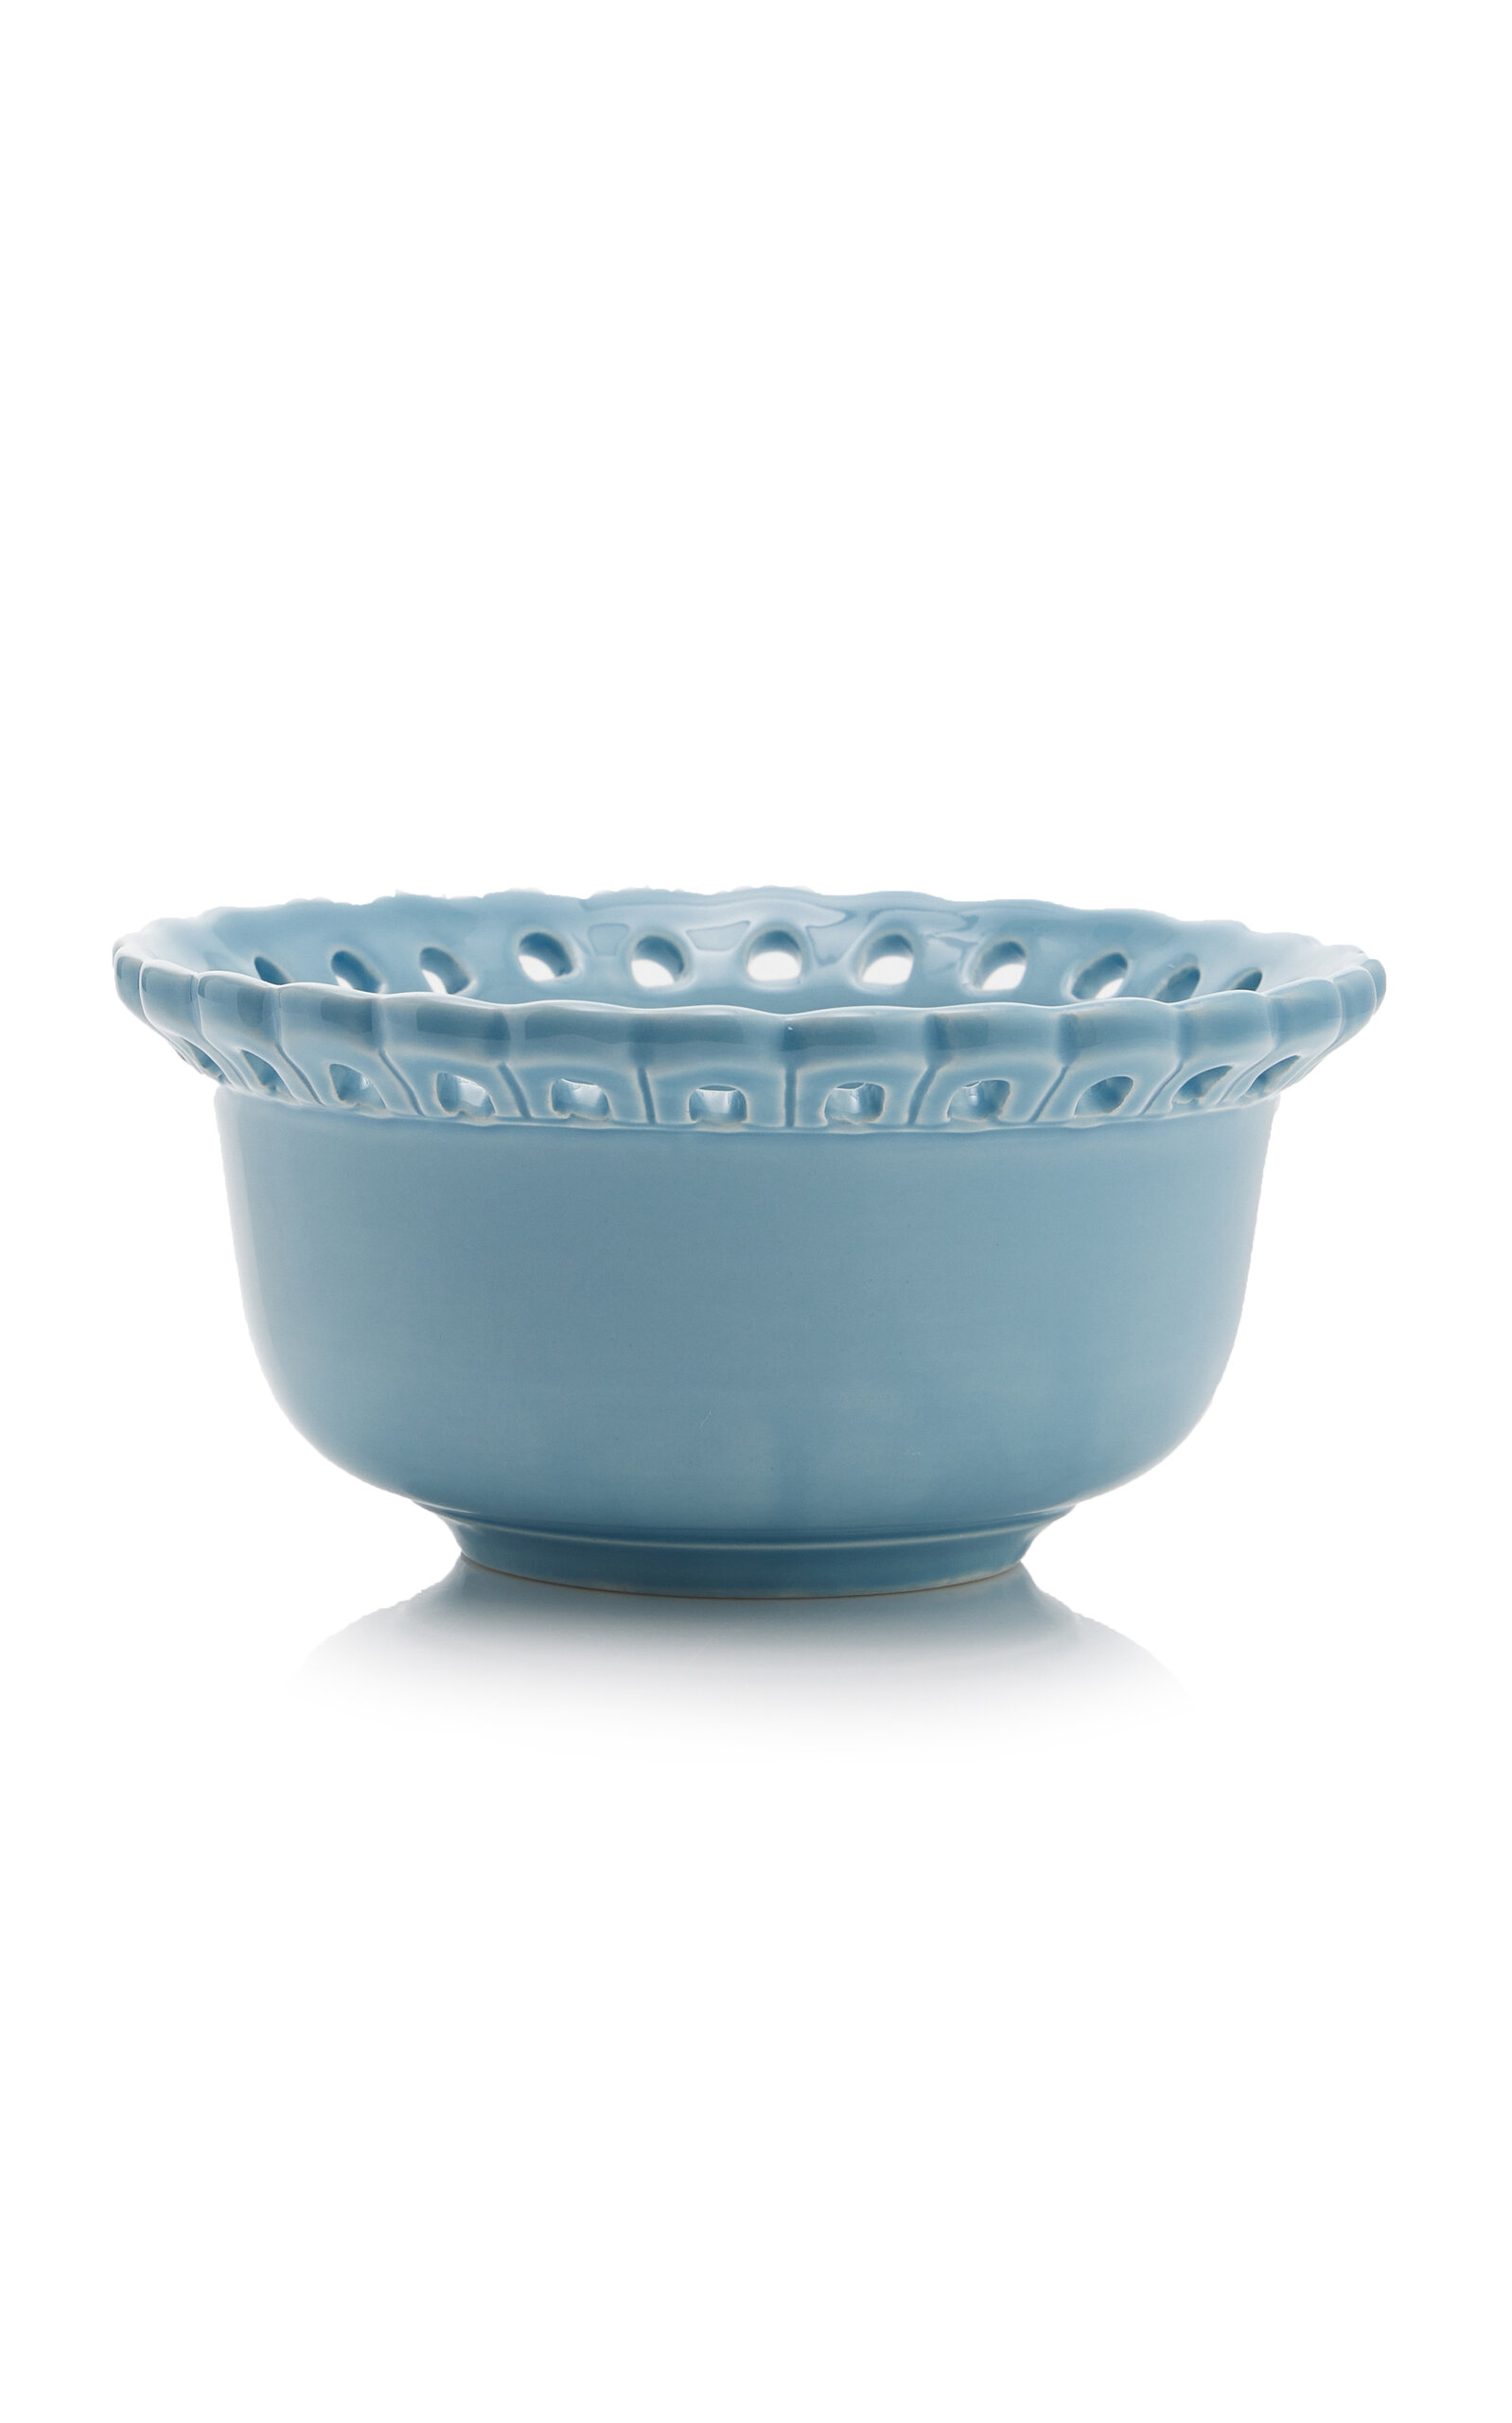 Moda Domus Balconata Creamware Consommé Bowl In Blue